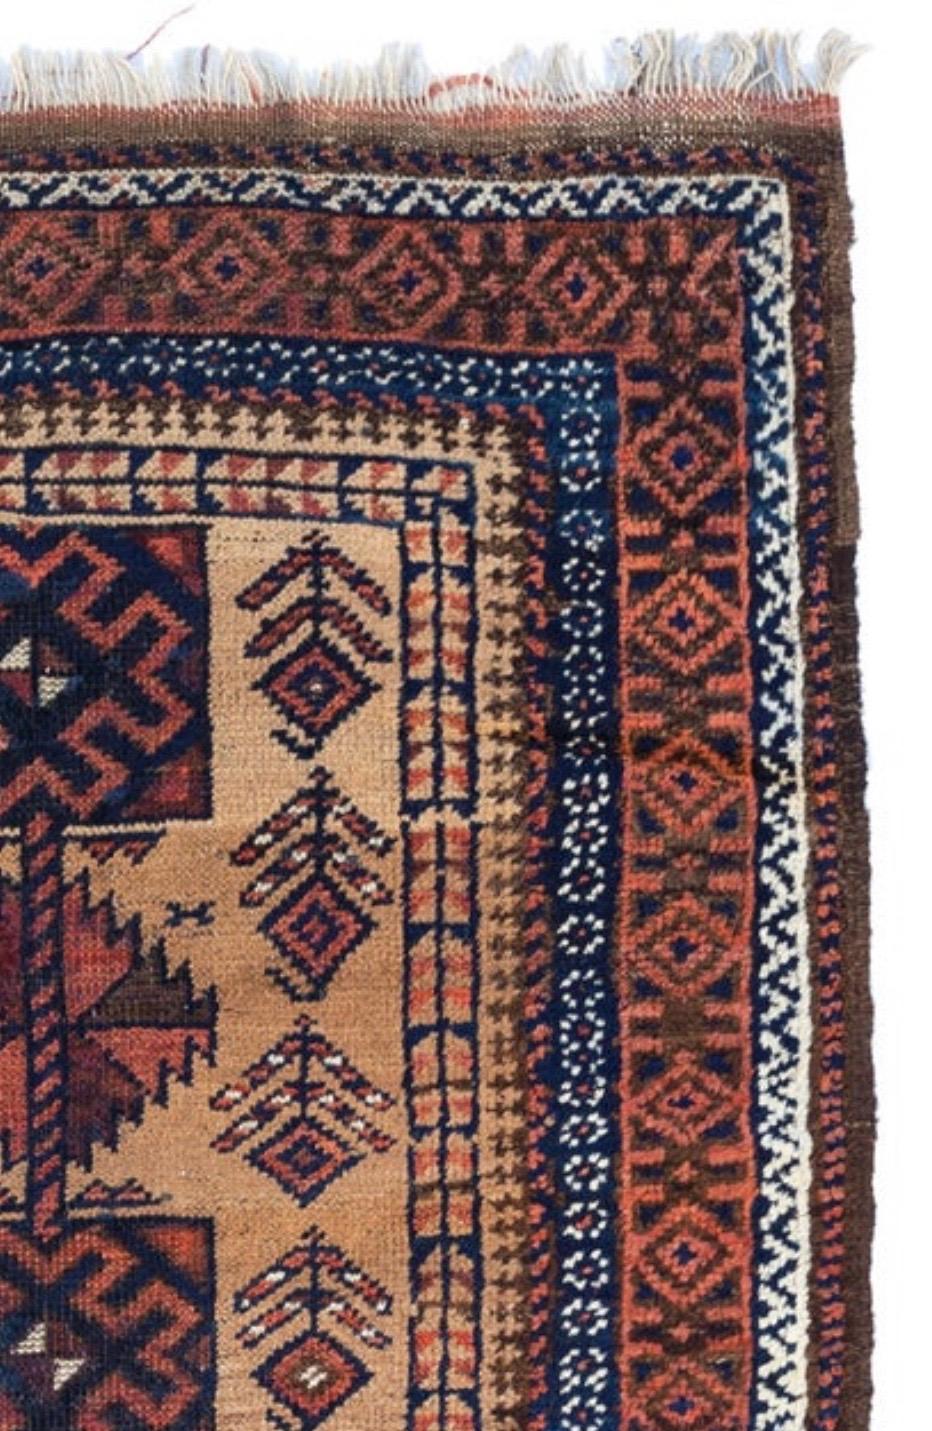 Hand-Woven Caucasian Rust Navy Blue Brown Tan Geometric Tribal Baluch Rug, circa 1930s For Sale